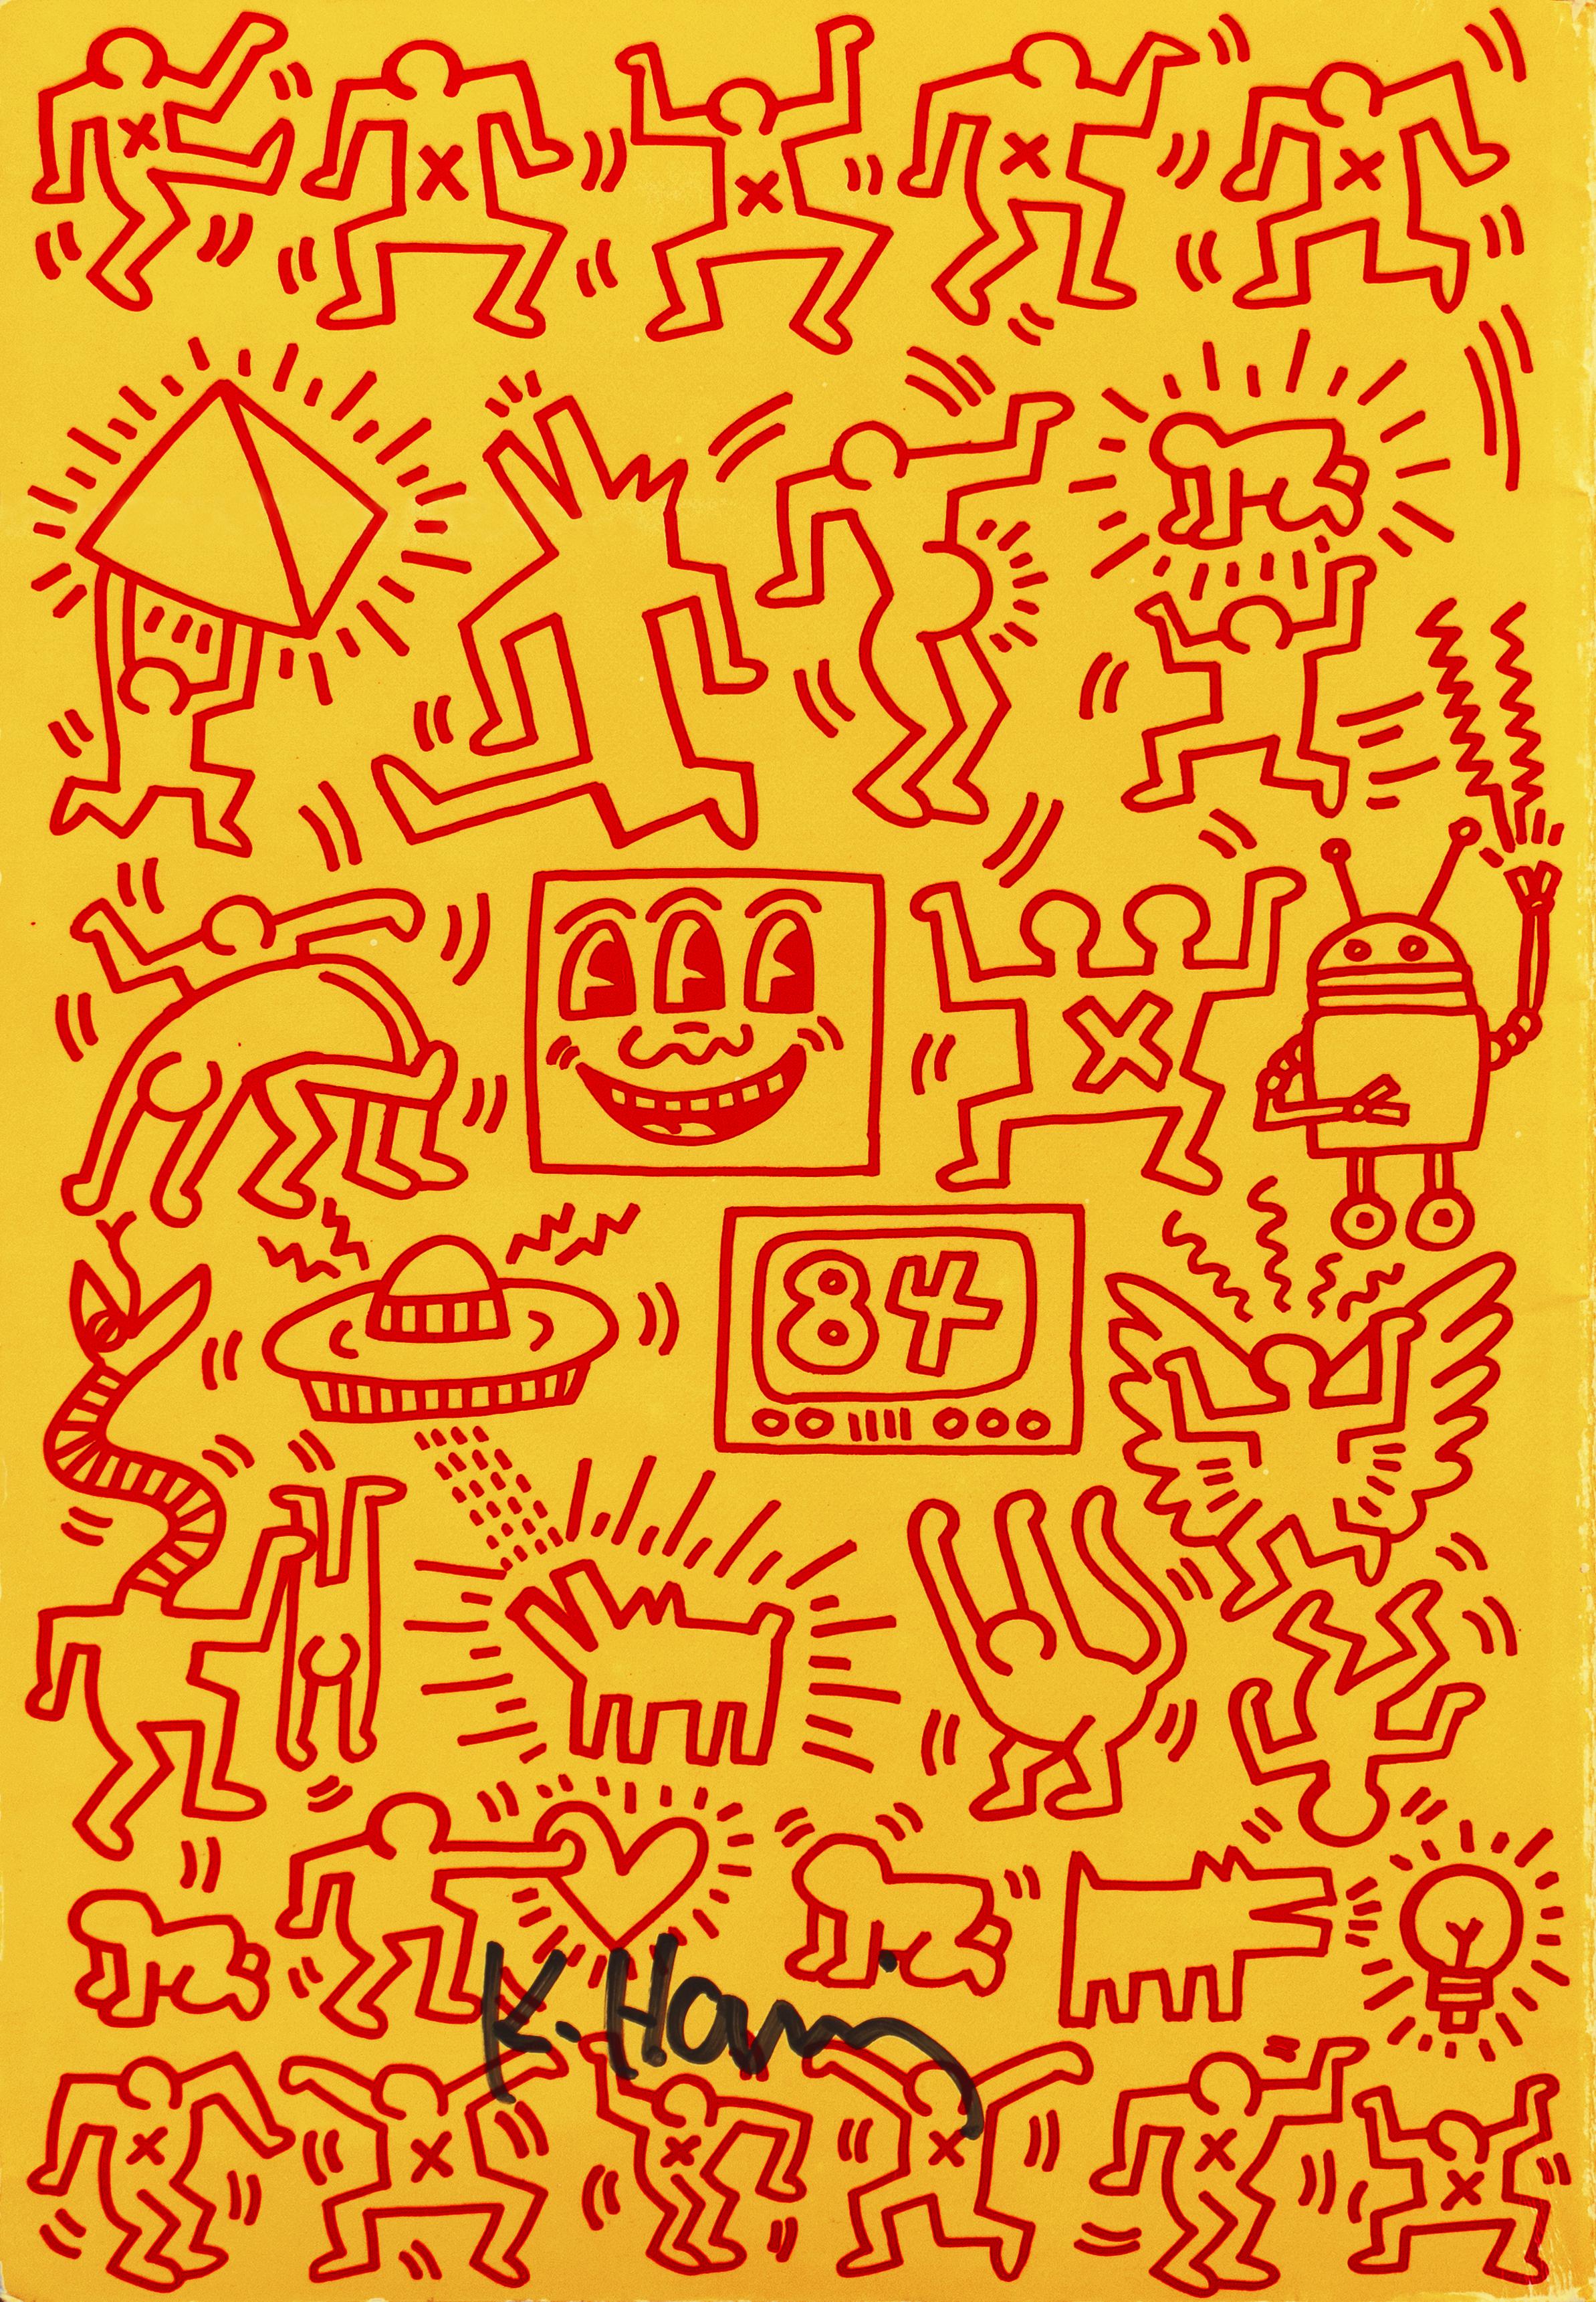 « Art in Transit », signé à la main par Haring, dessins de métro, New York, Pop Art - Print de Keith Haring